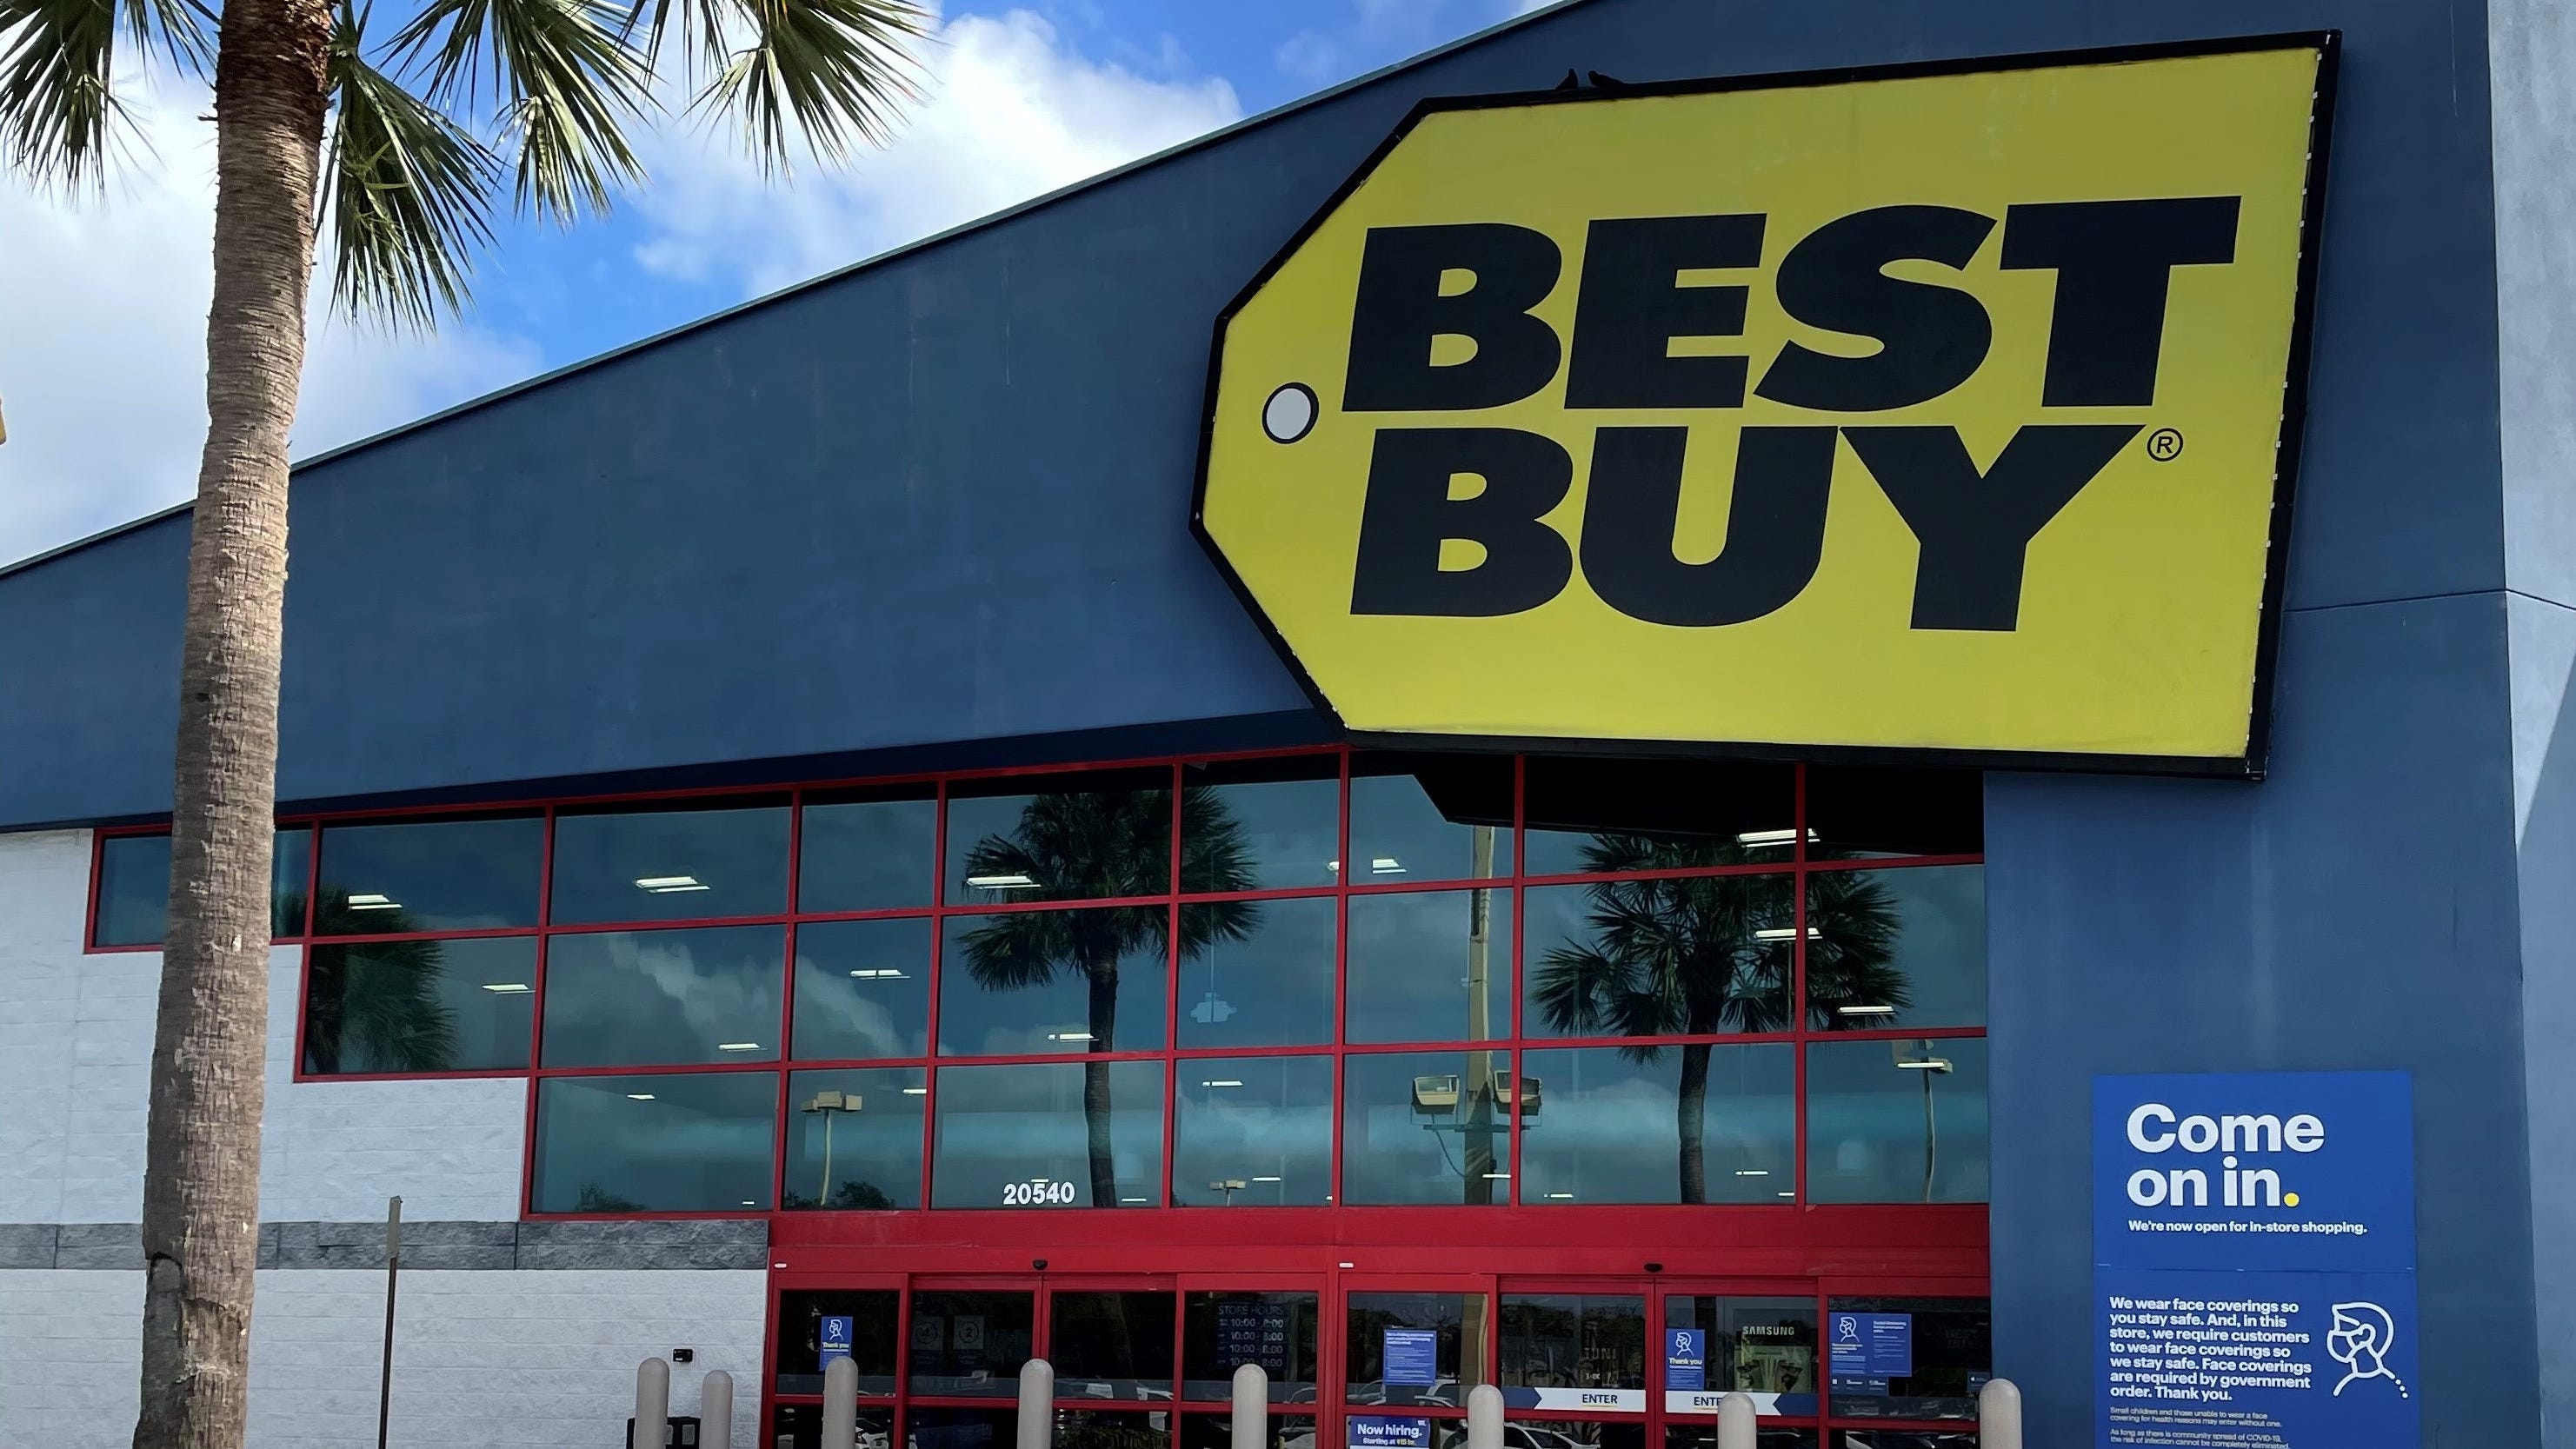 Best Buy Black Friday deals 2021 sale starts a week early on Nov. 19